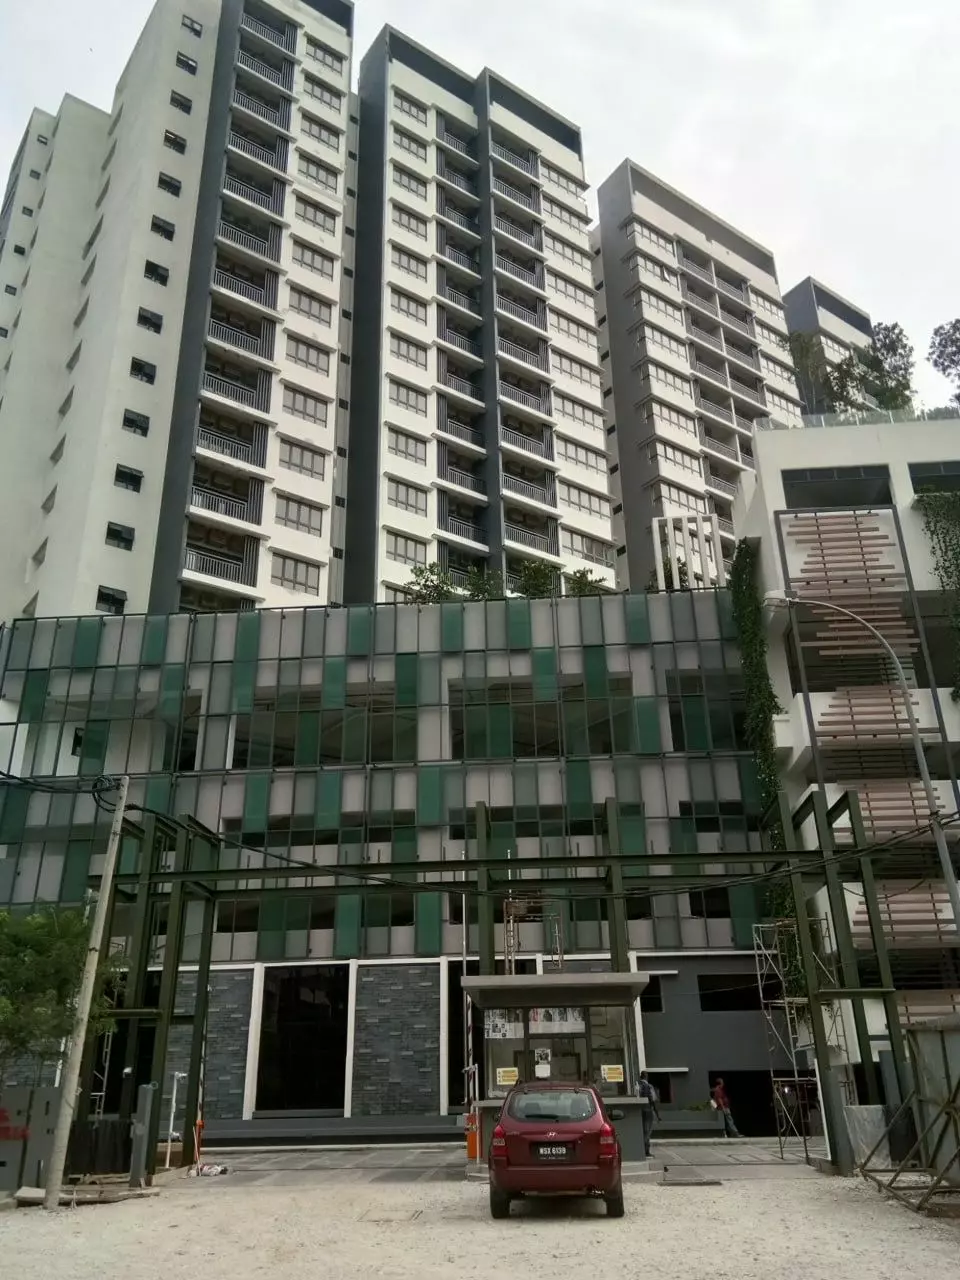 Rumah Lelong Suria Residence @ Bukit Jelutong, Shah Alam, Selangor for Auction